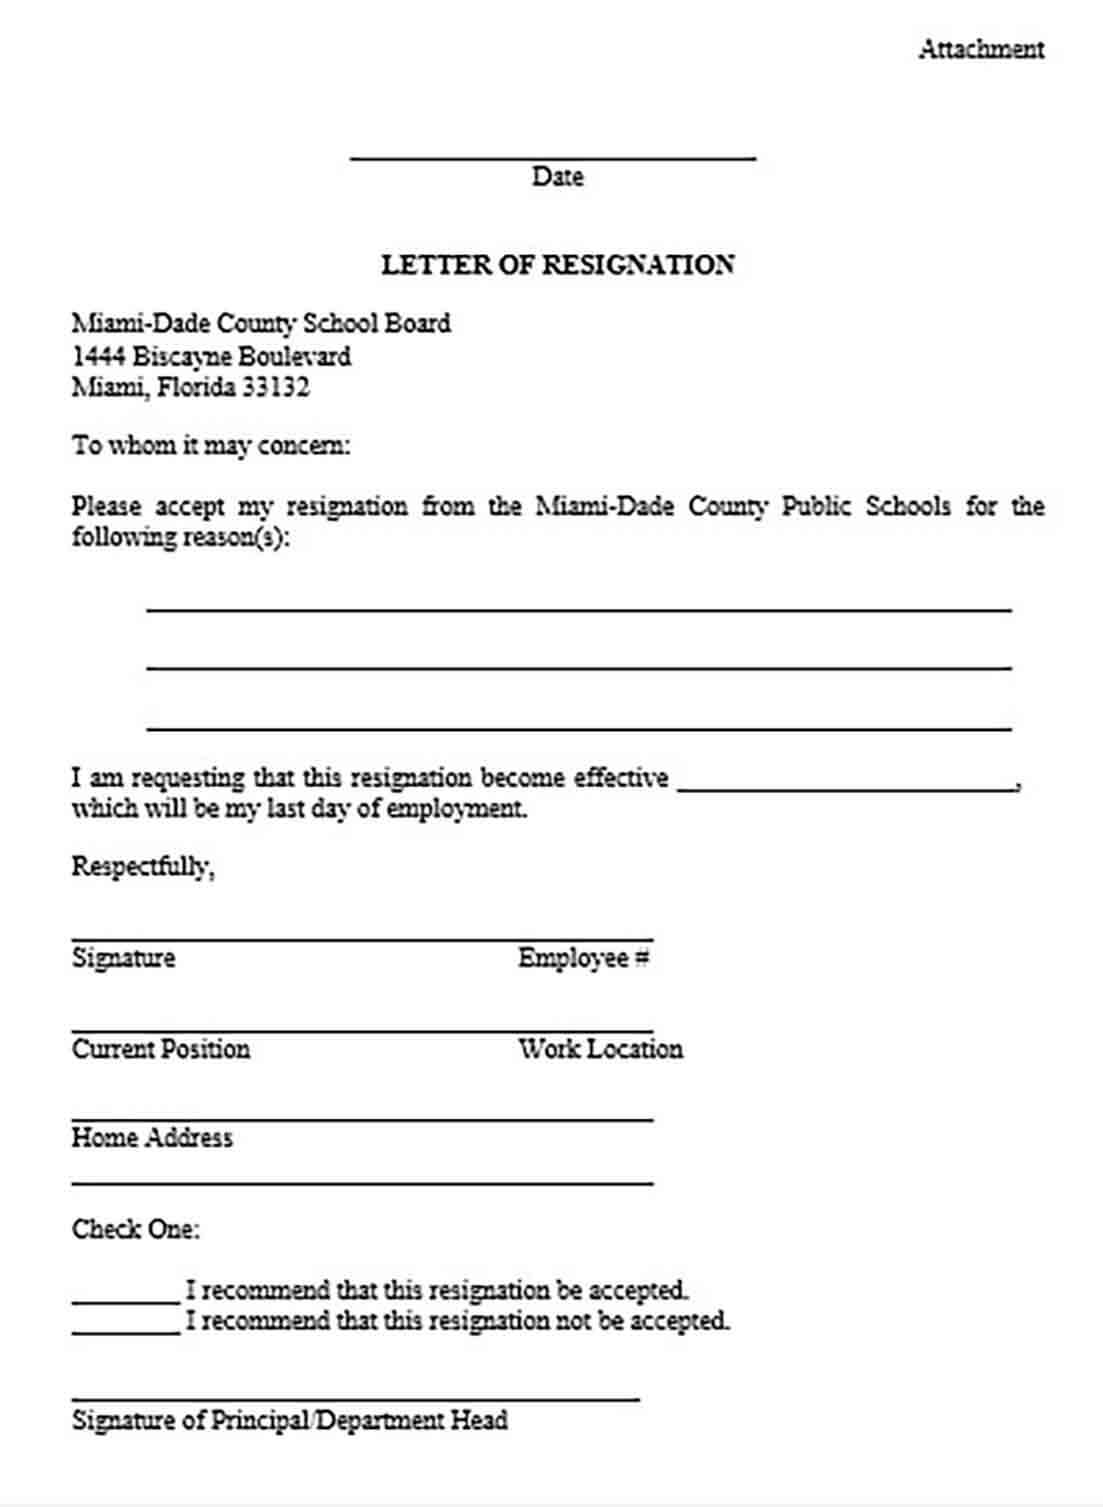 School Board Resignation Letter in